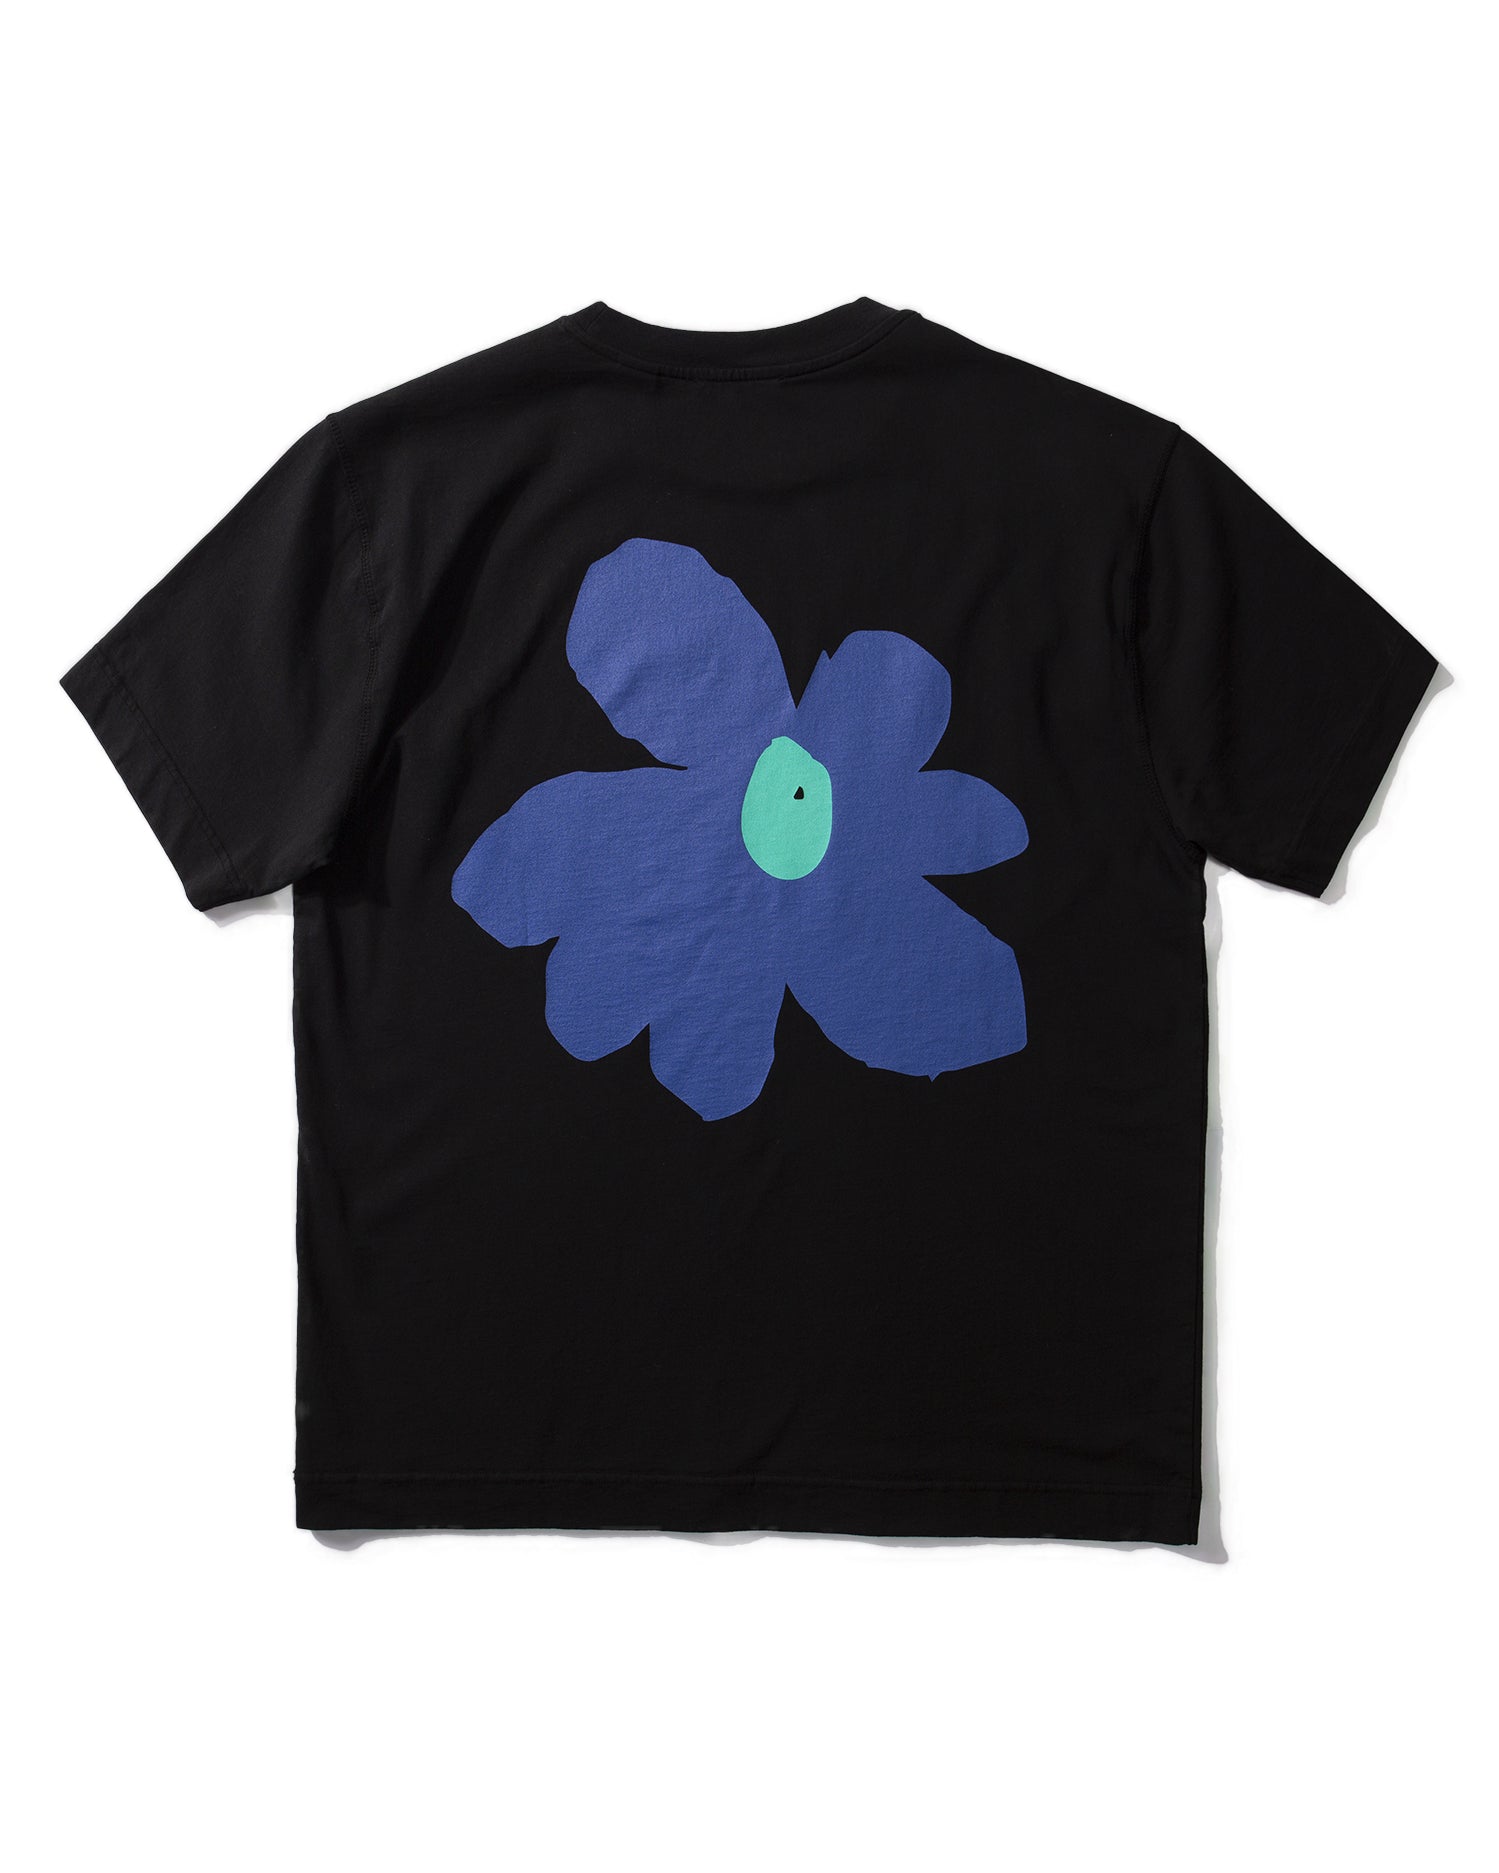 Botanic Society T-Shirt - Black